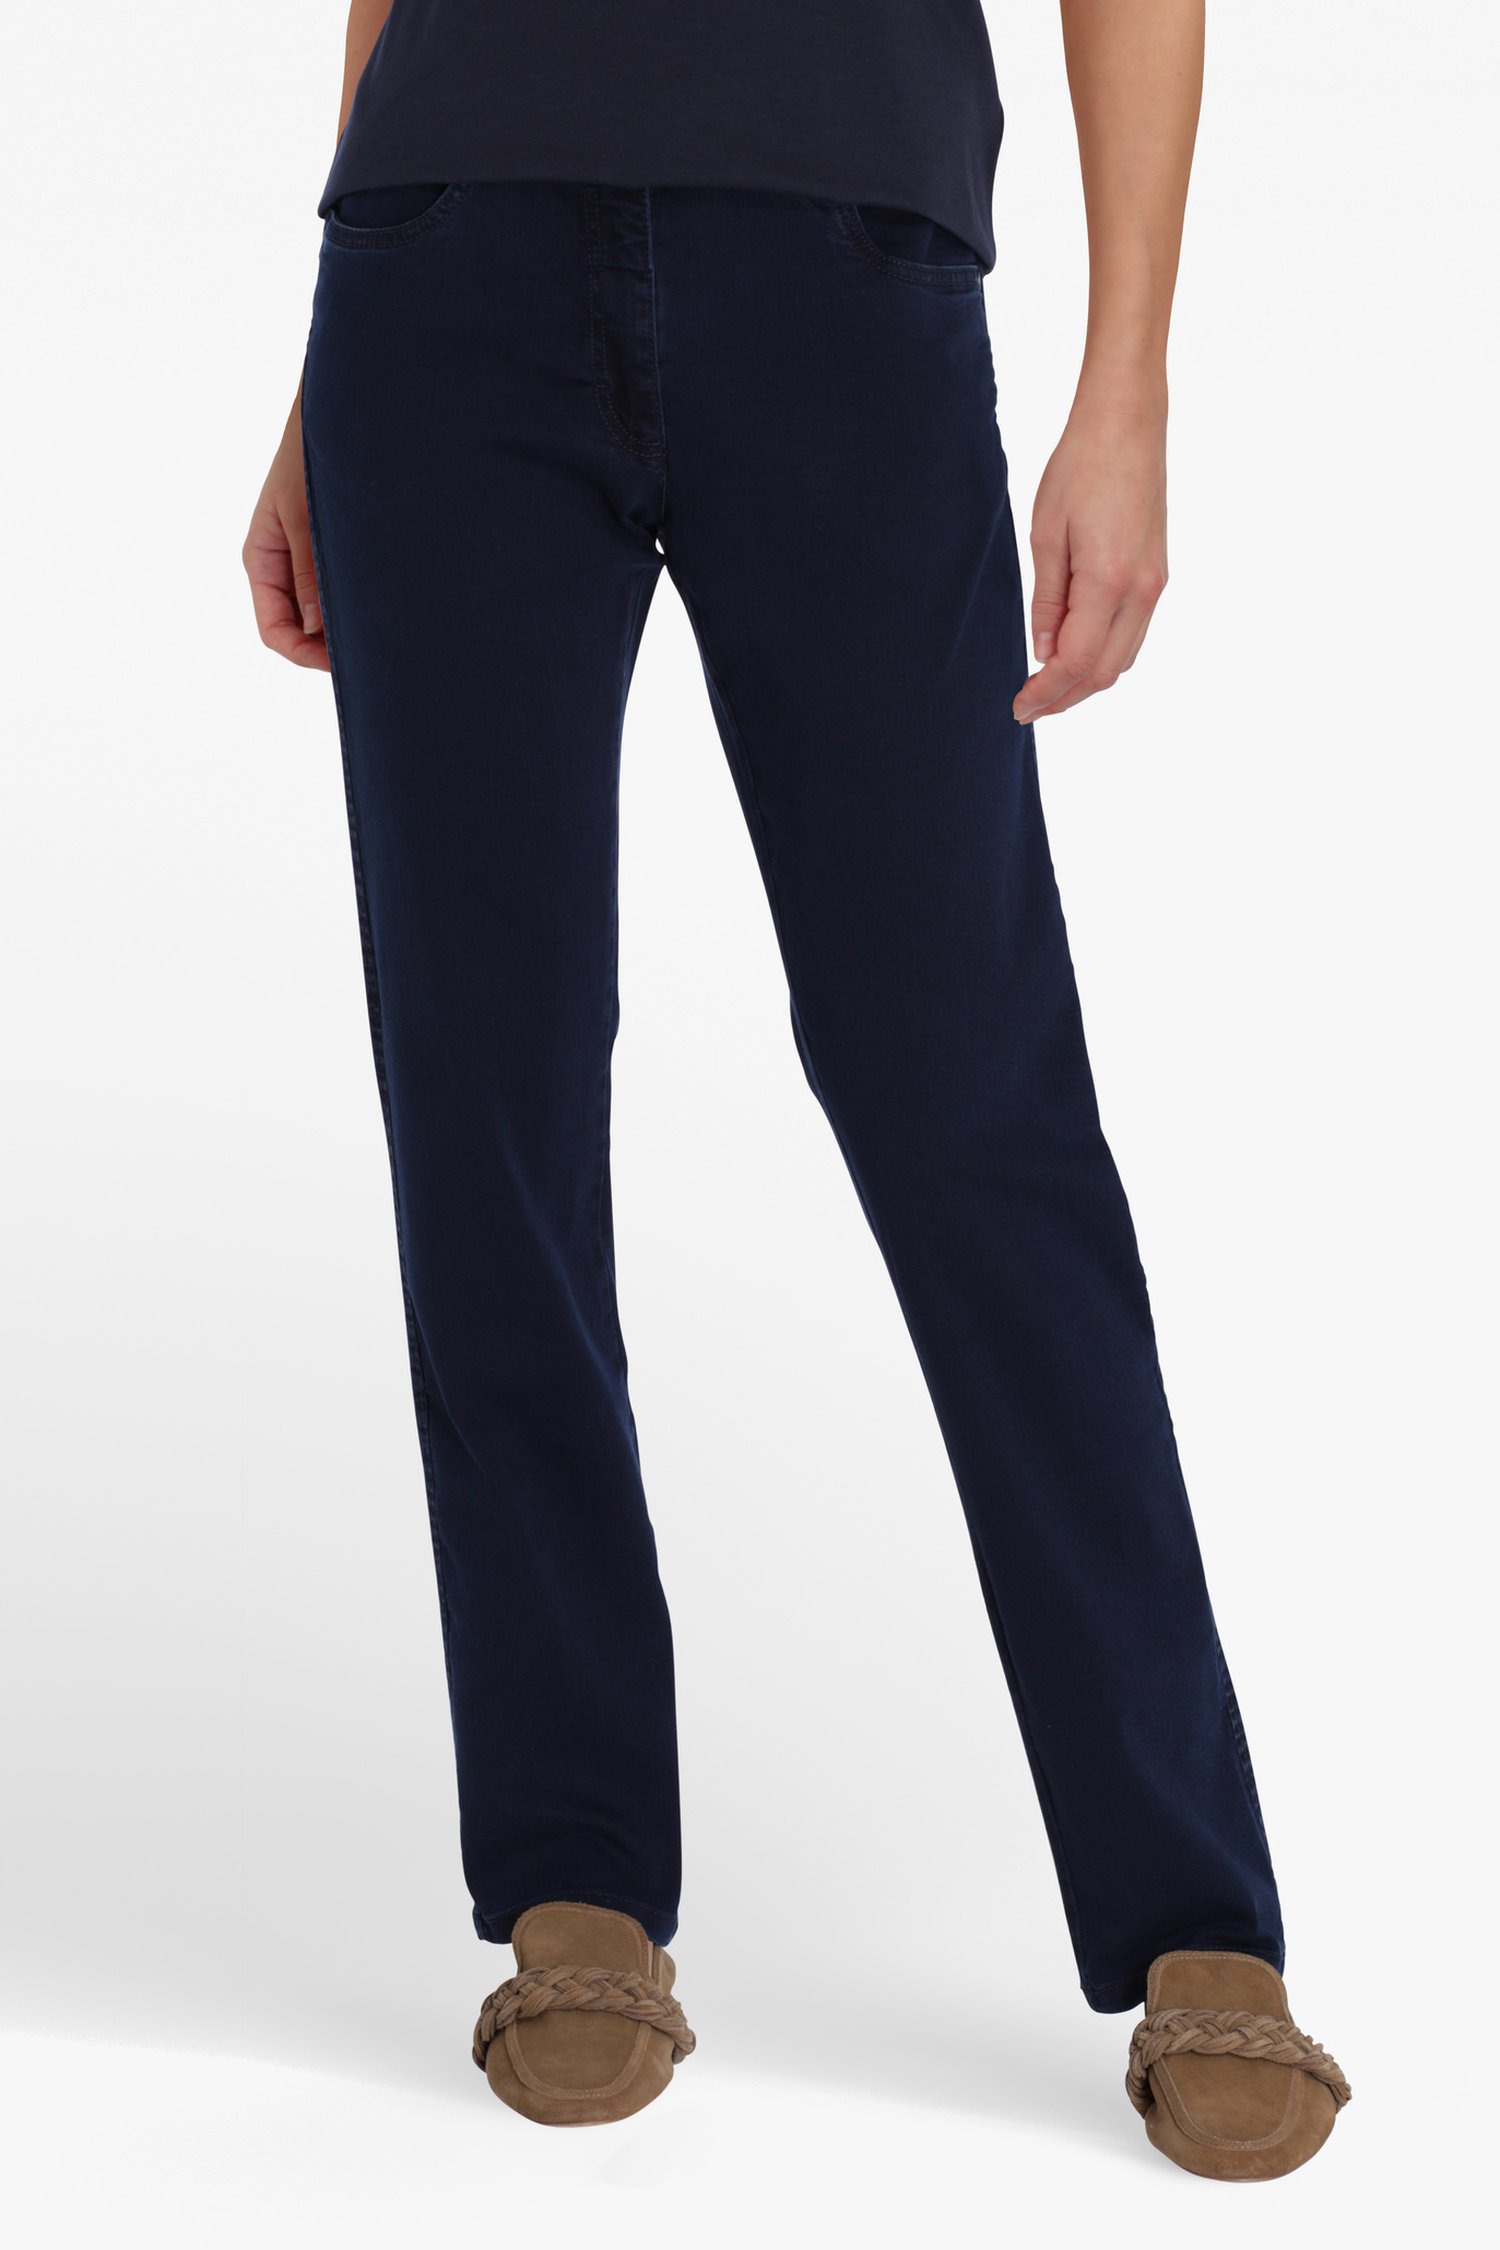 Berucht zonde Dalset Blauwe jeans met hoge taille - slim fit - L30 van Bicalla | 4555764 | e5